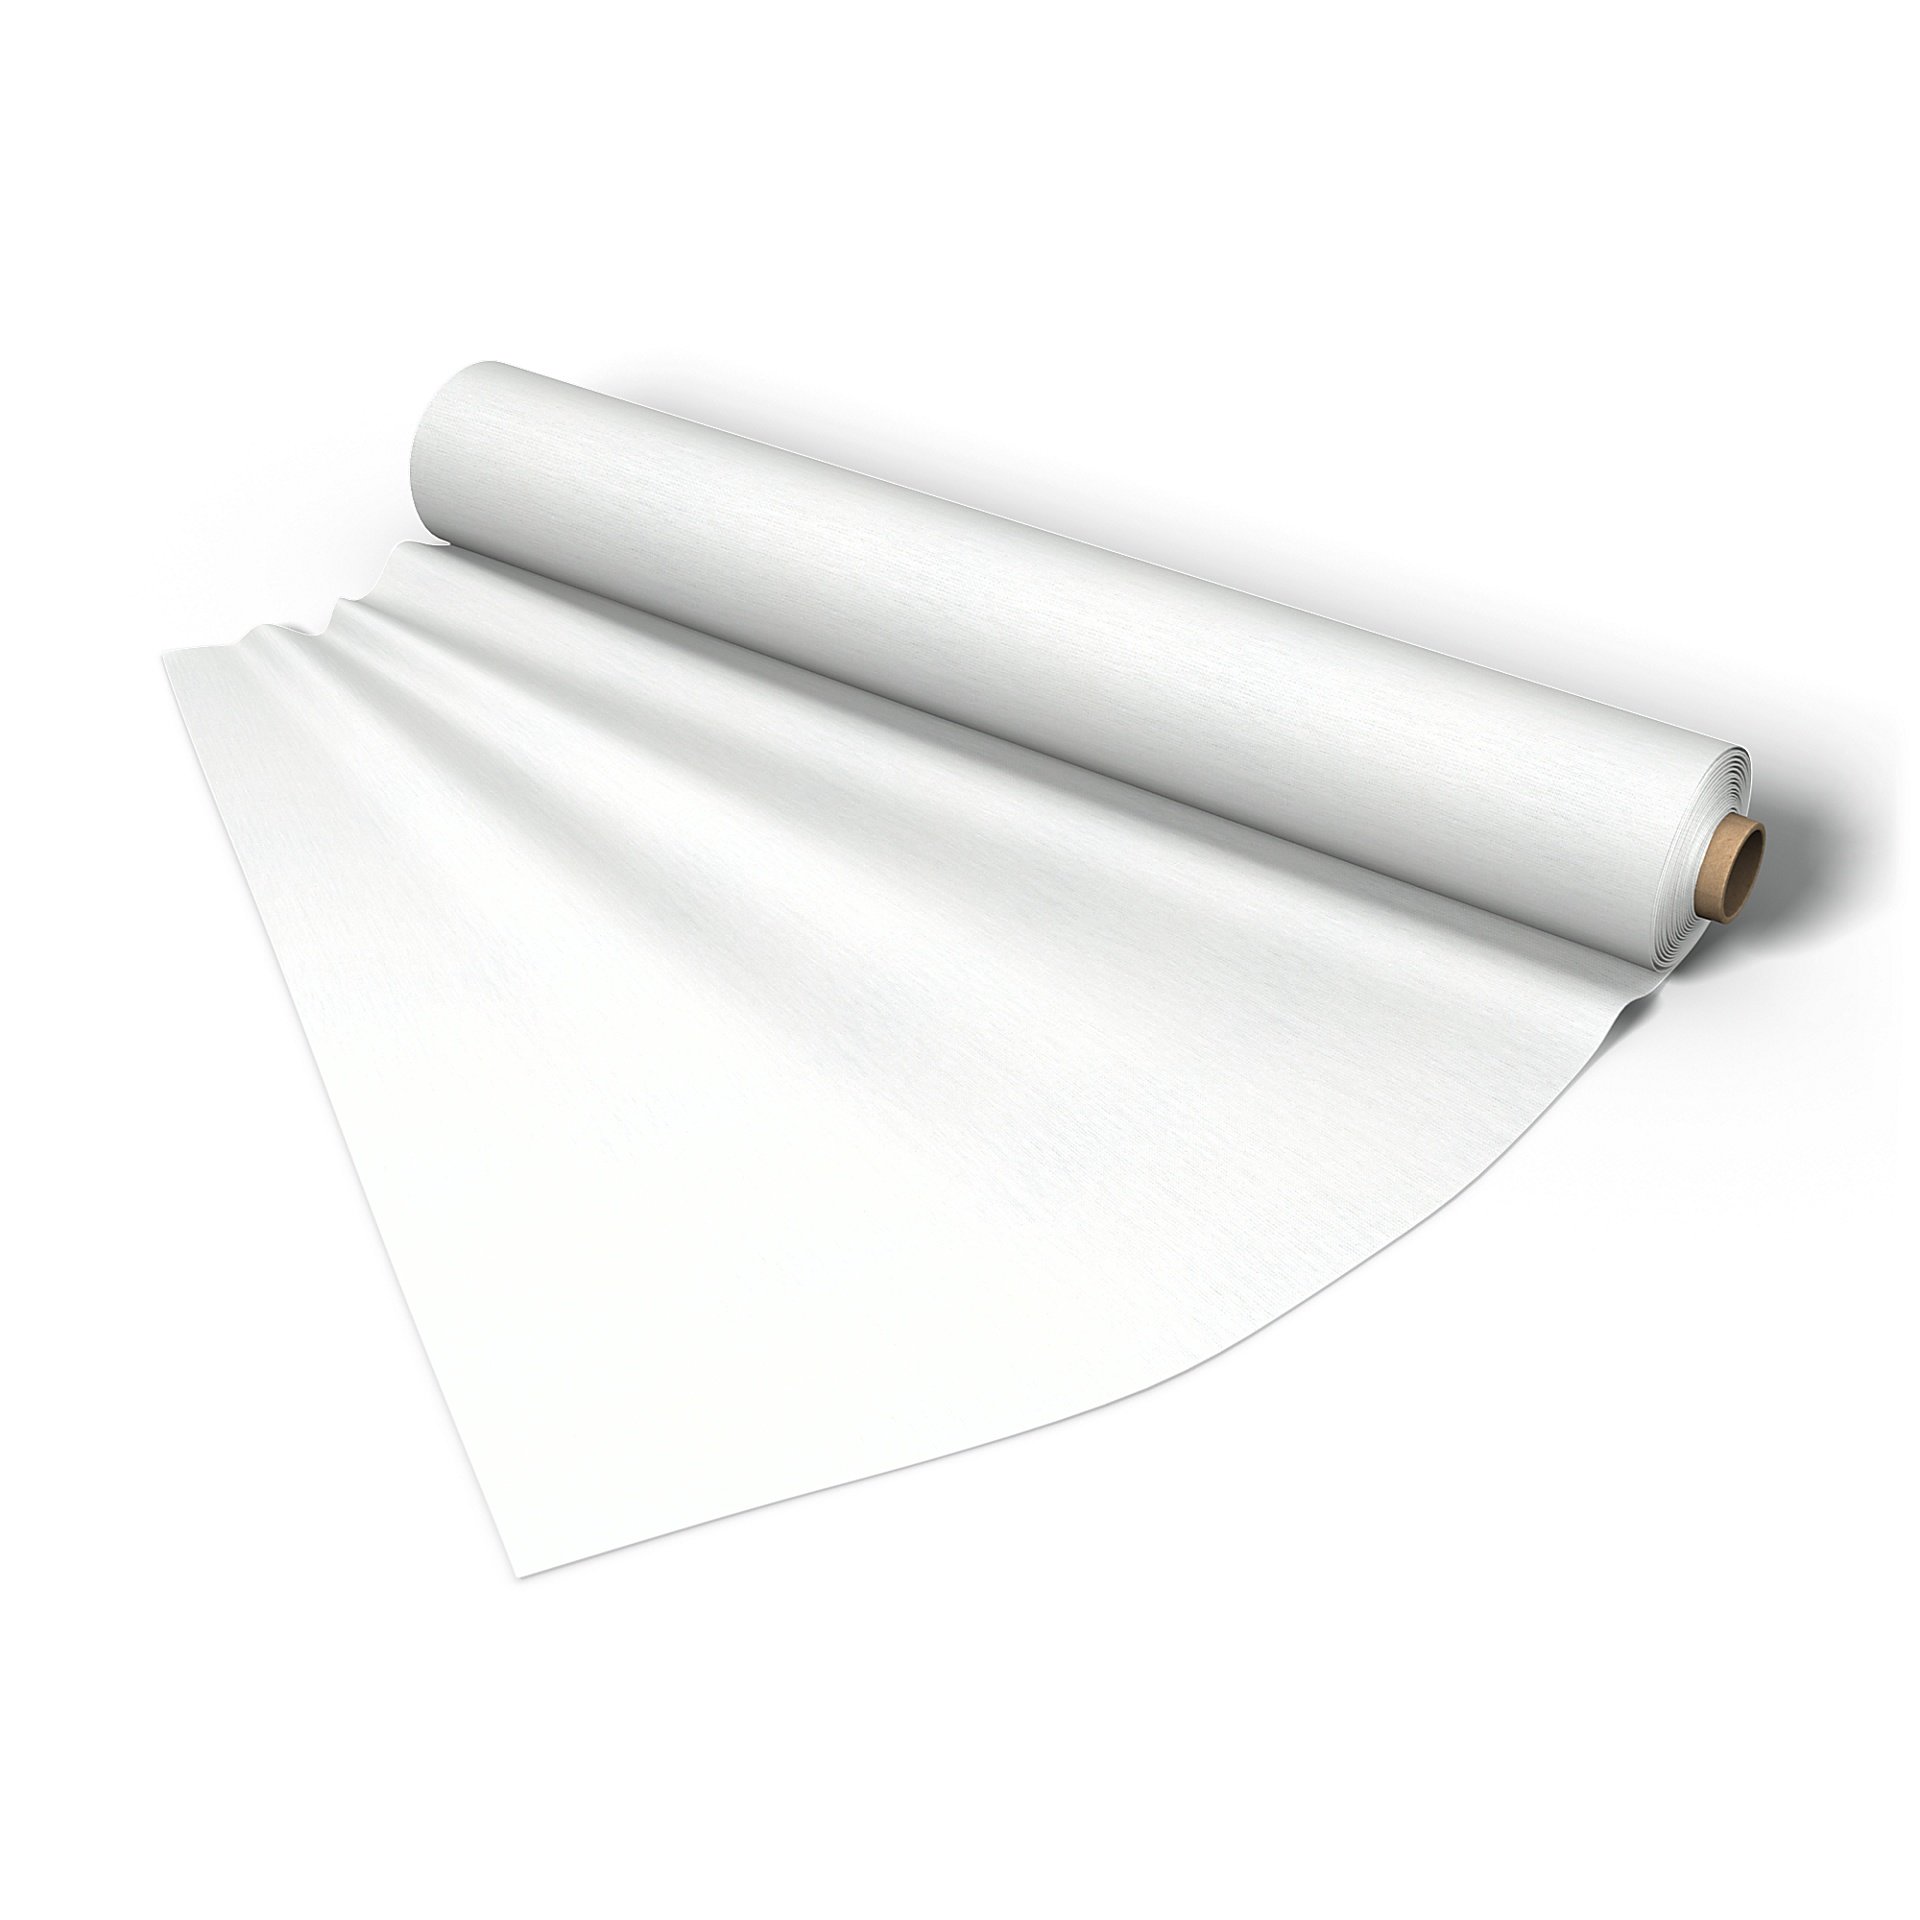 Fabric per metre, White, Linen - Bemz